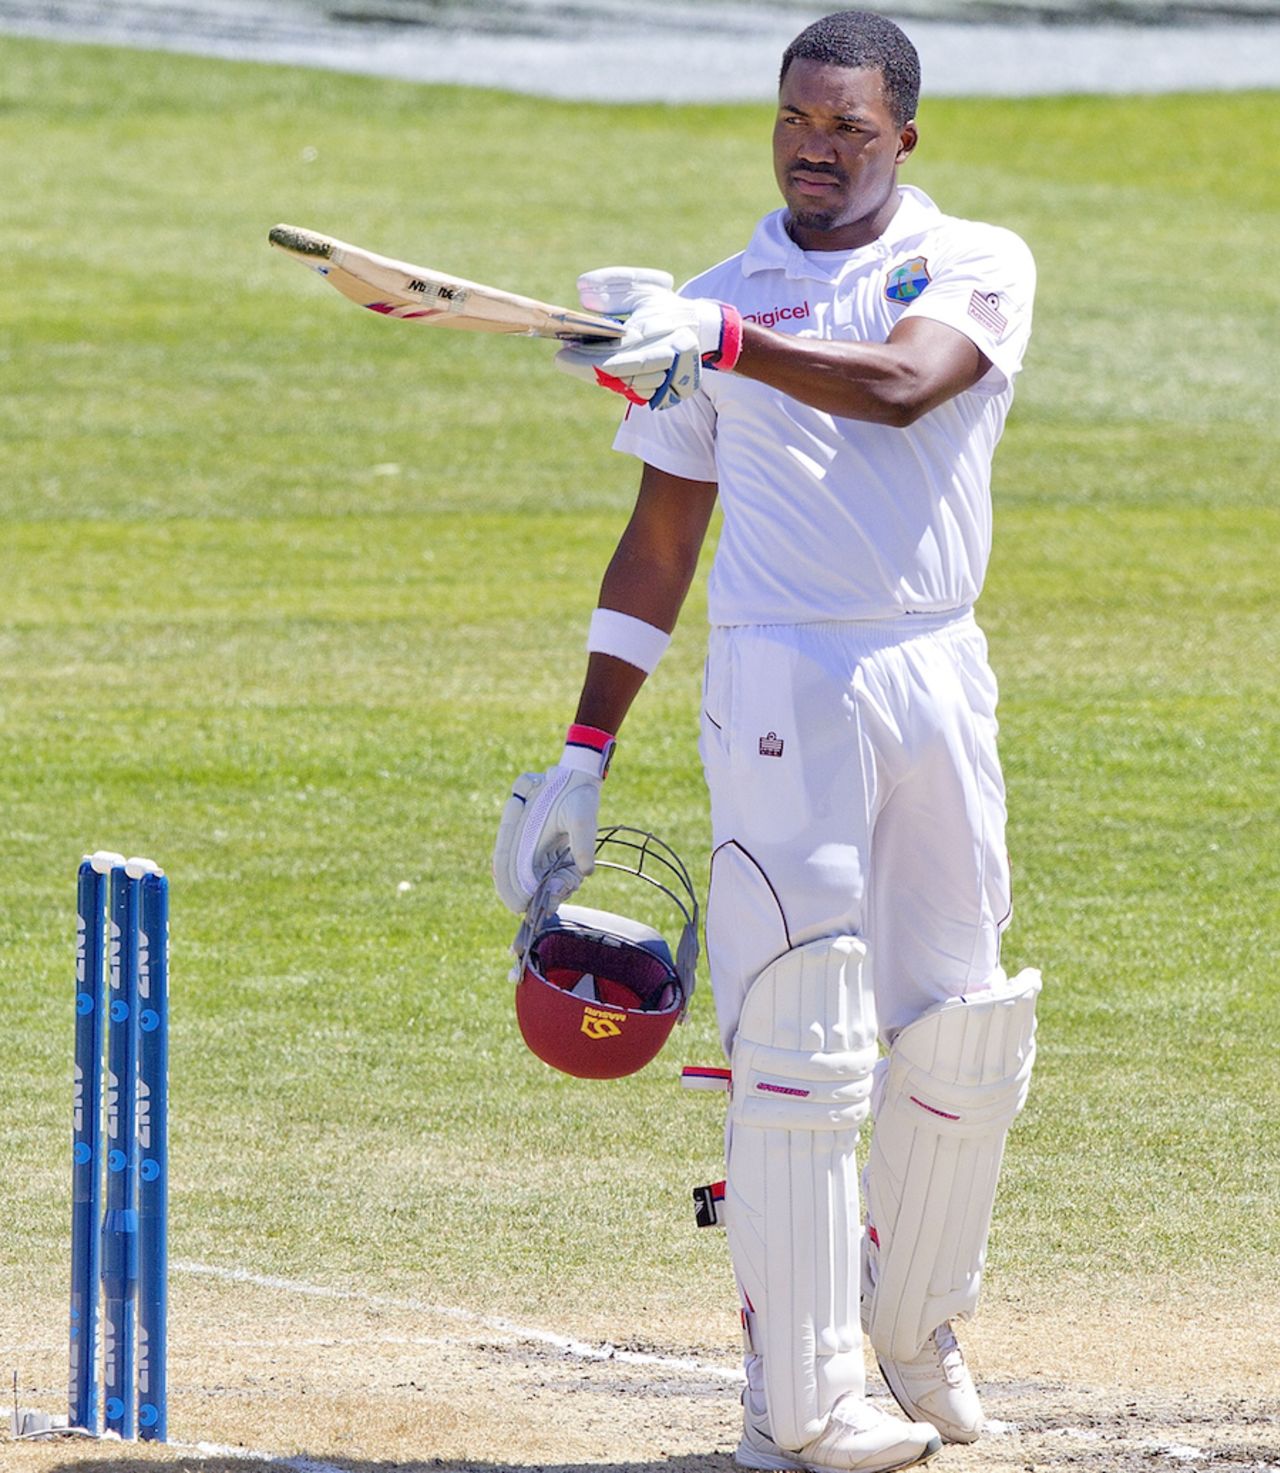 Darren Bravo raises his bat after reaching his fifth Test century, New Zealand v West Indies, 1st Test, Dunedin, 4th day, December 6, 2013